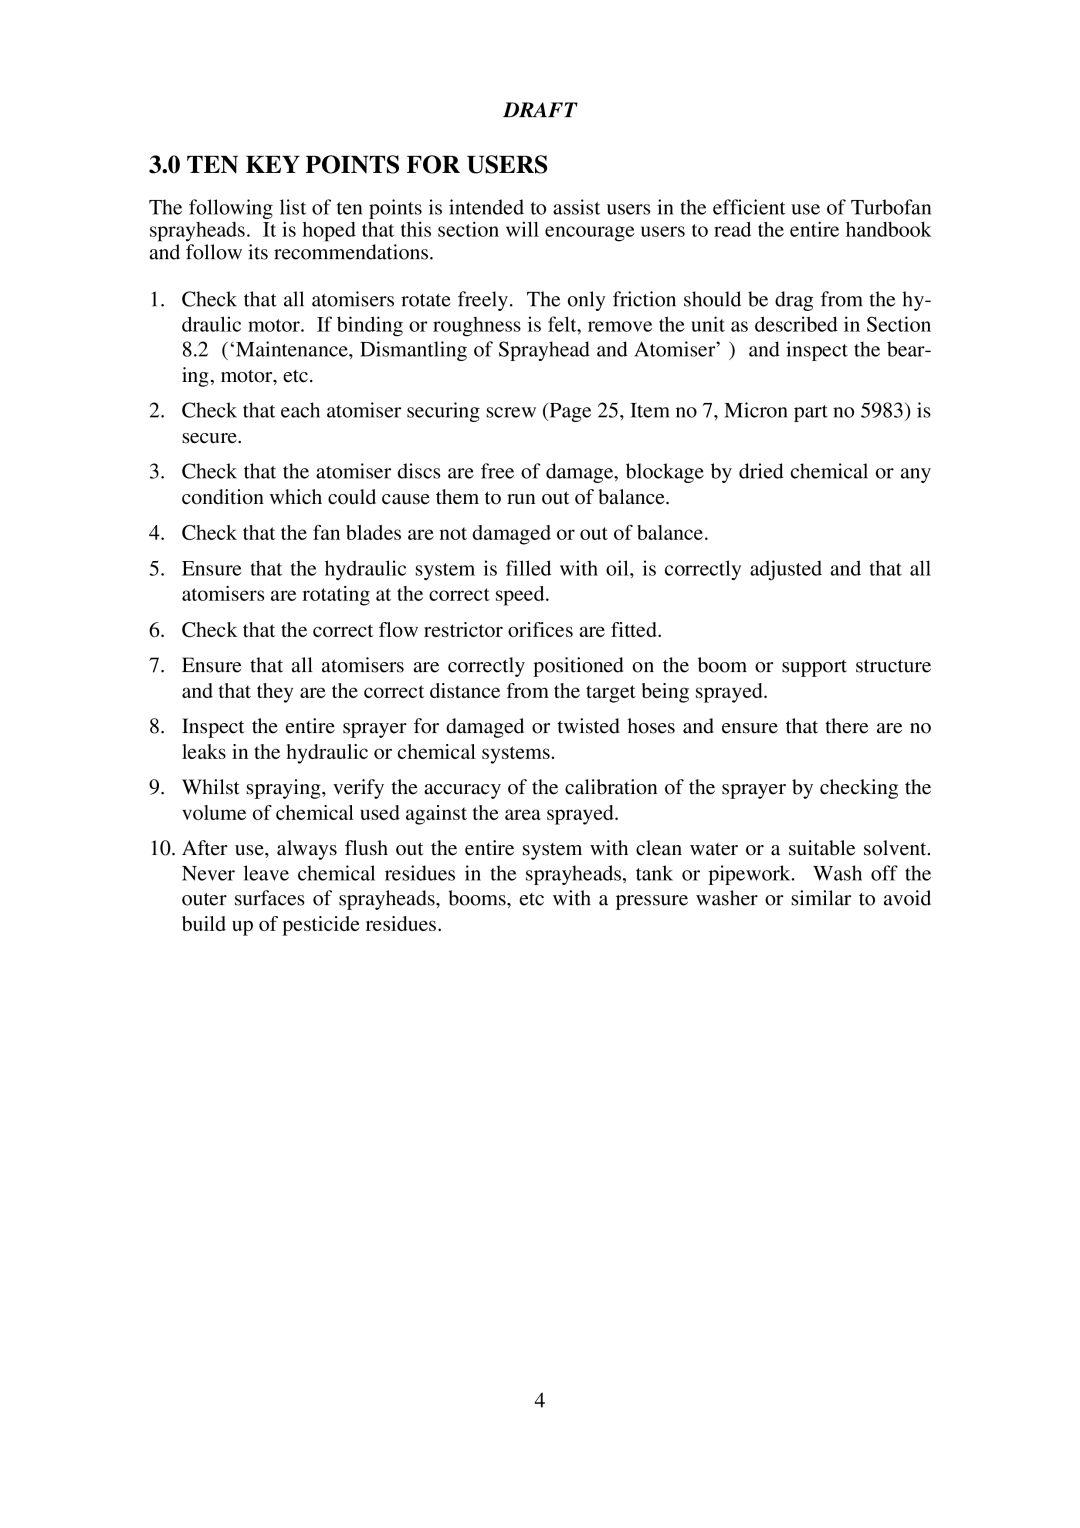 Micron Technology Turbofan instruction manual Ten Key Points For Users, Draft 